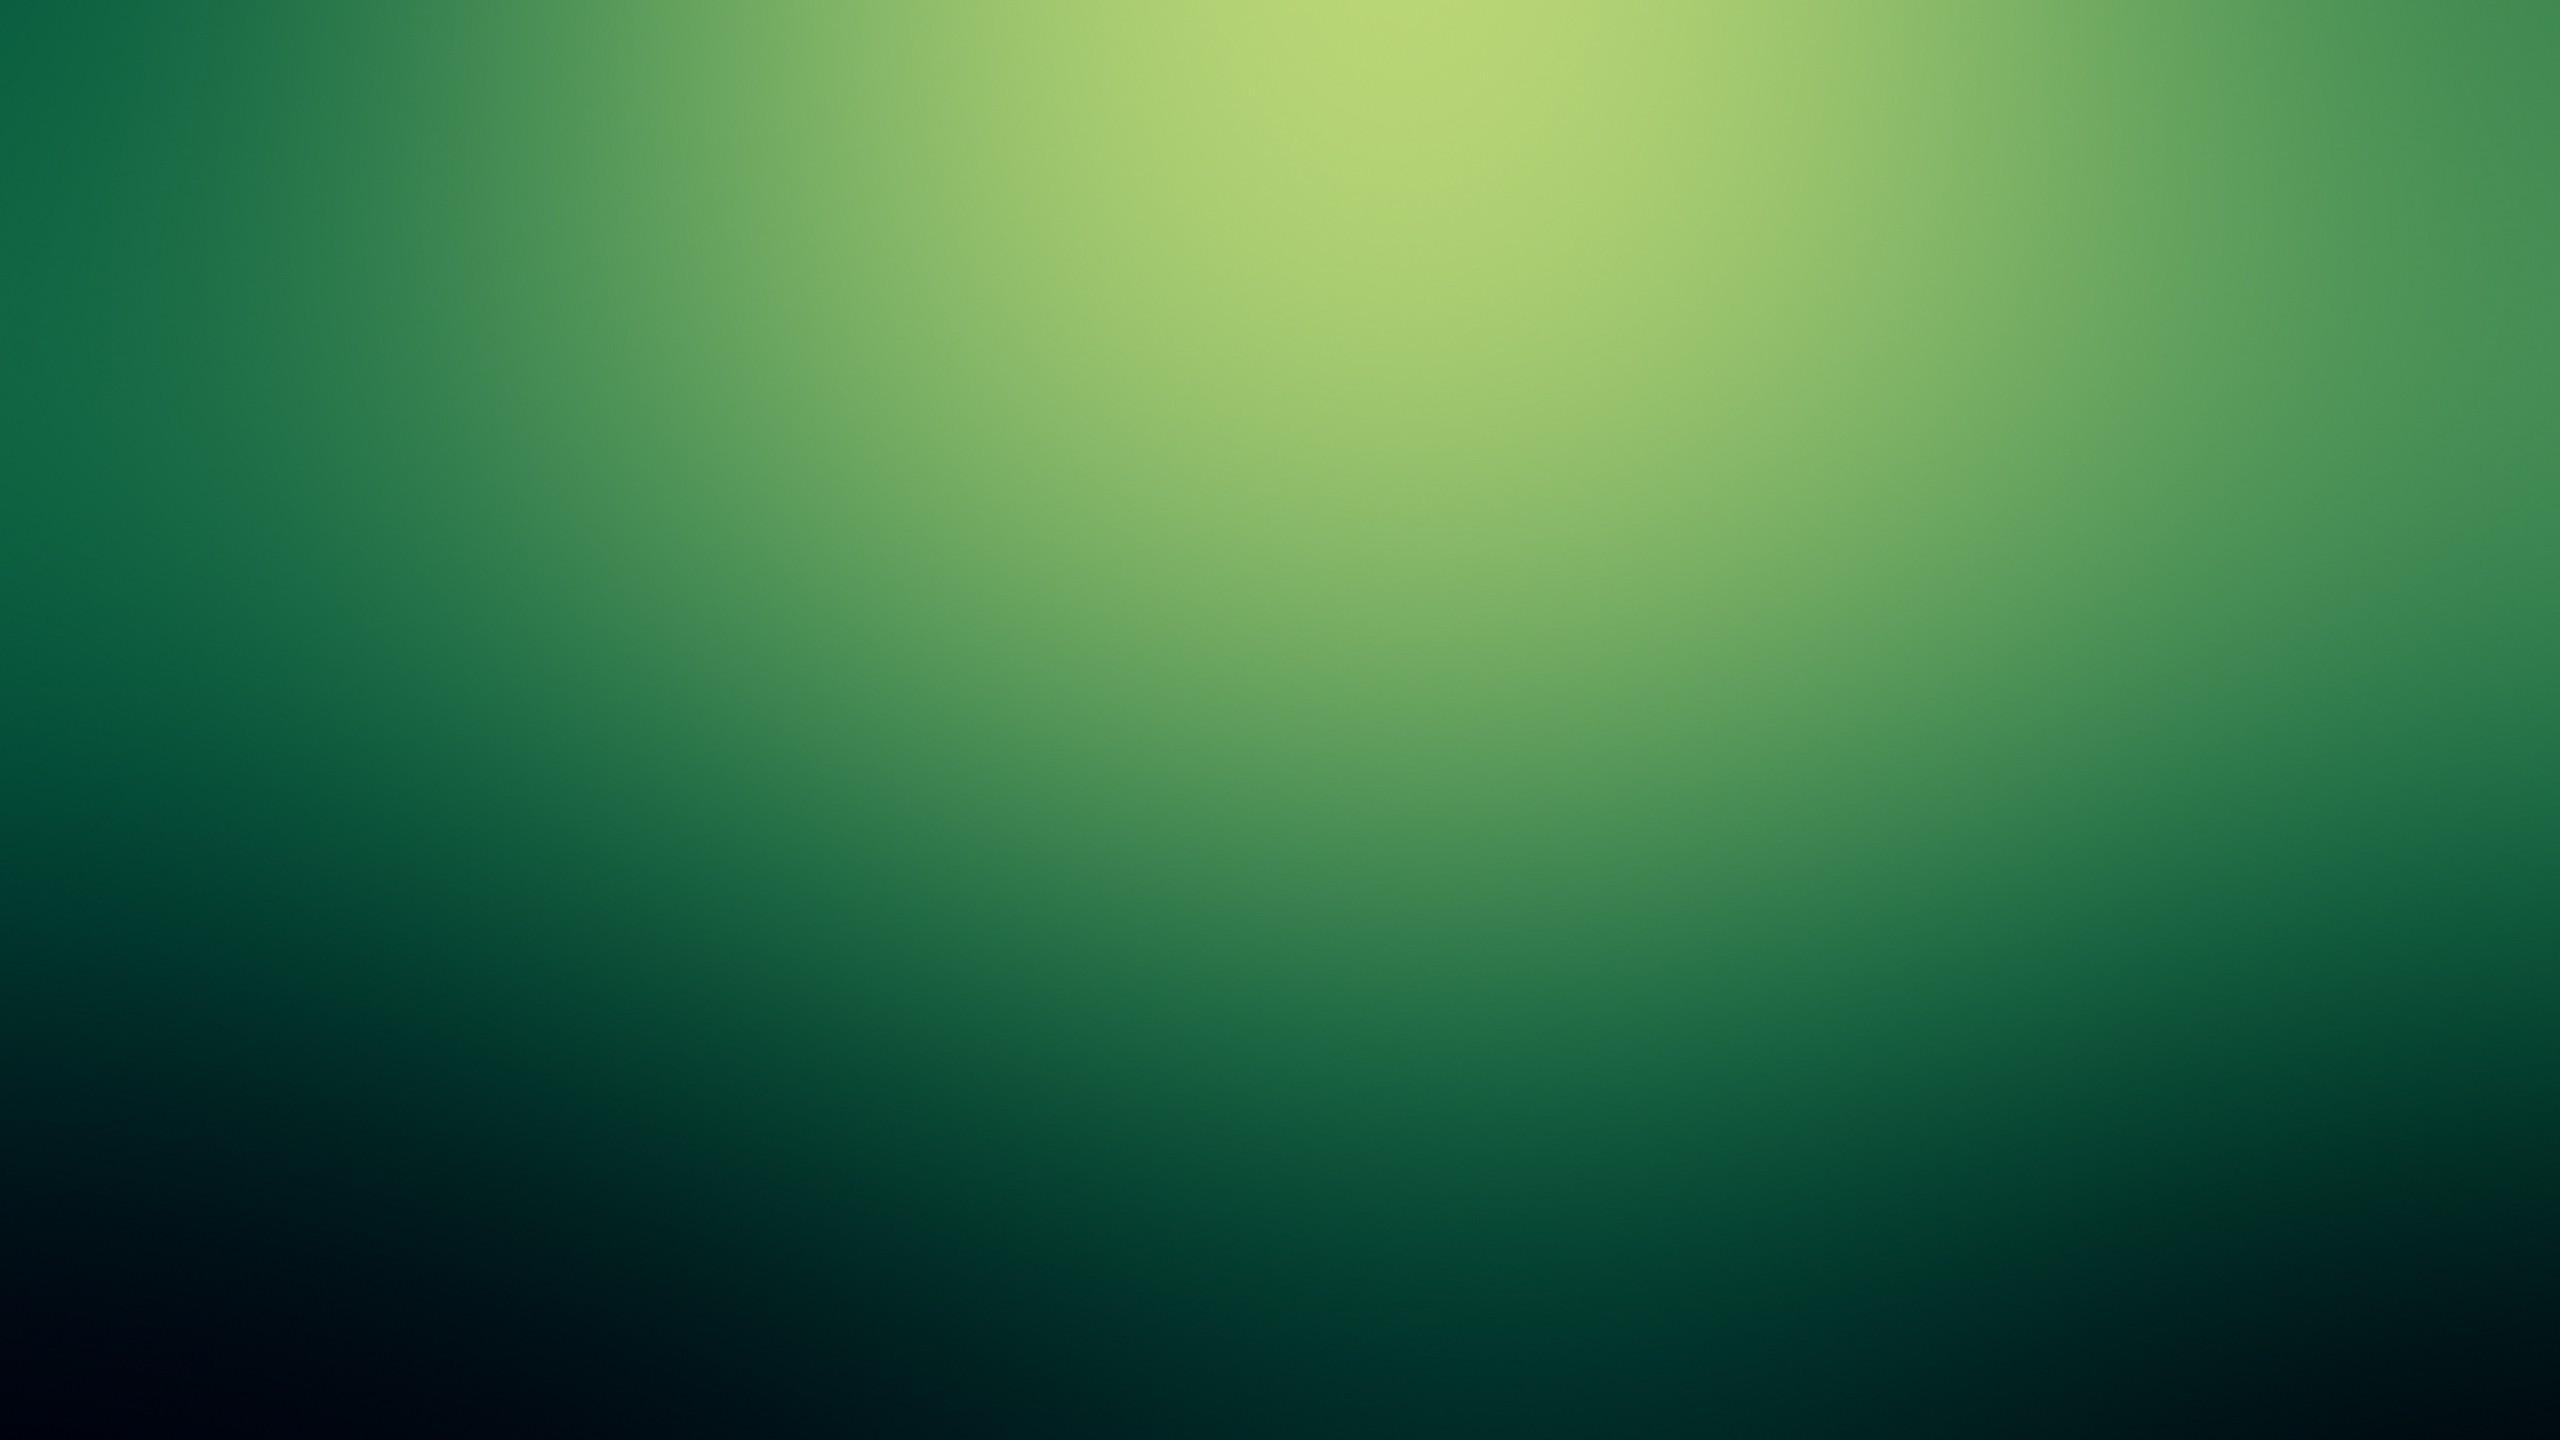 Green Gradient Wallpaper 26051 2560x1440px